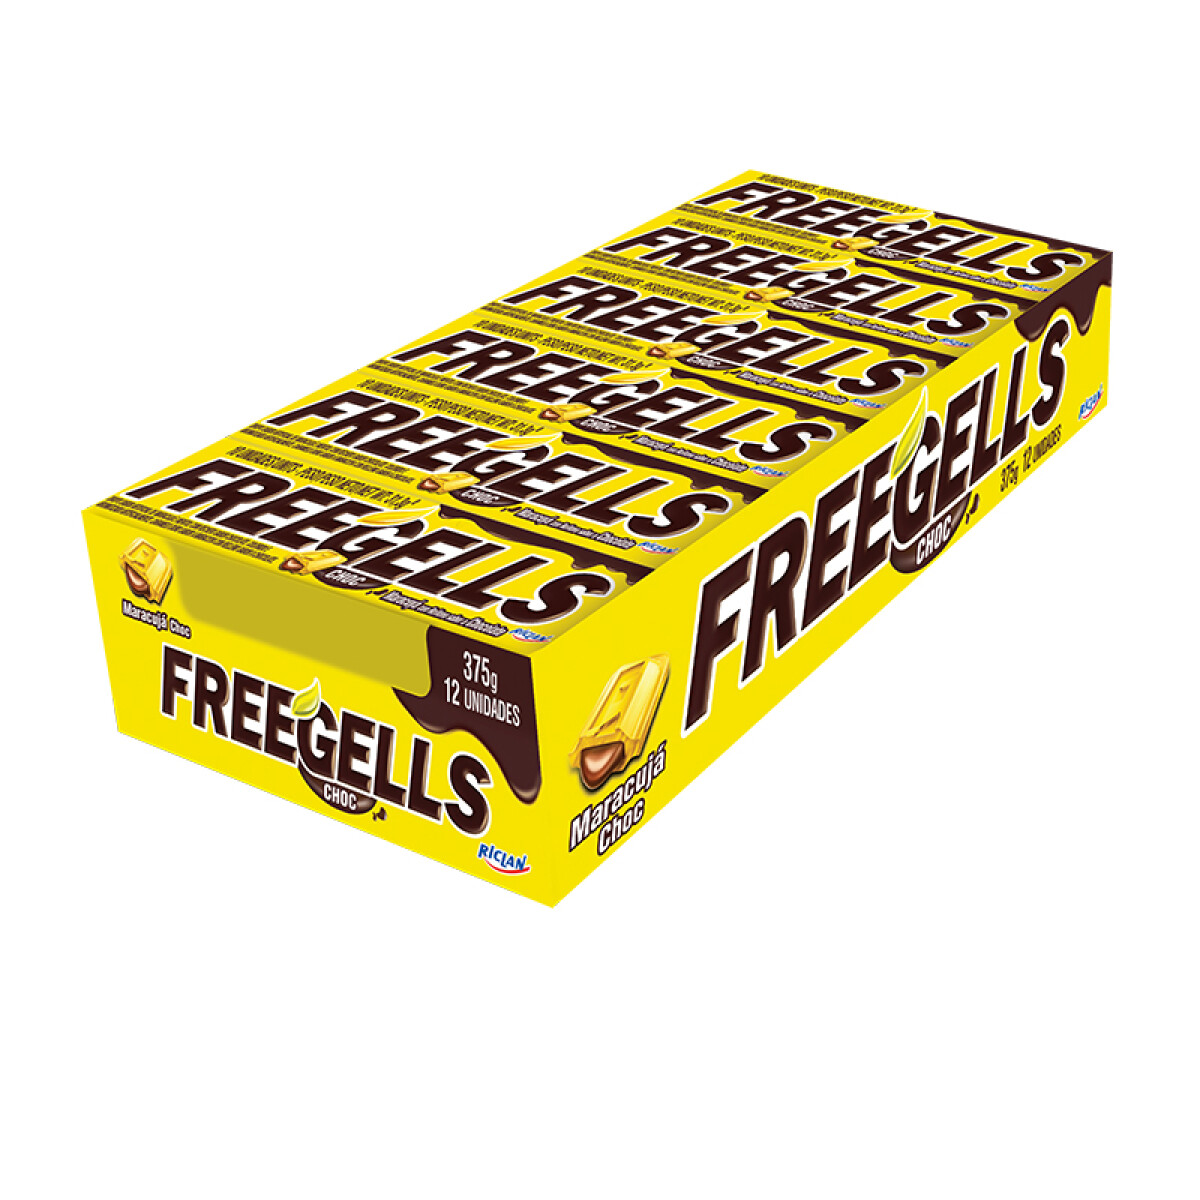 Pastillas FREEGELLS x12 Unidades - Maracuyá con Chocolate 